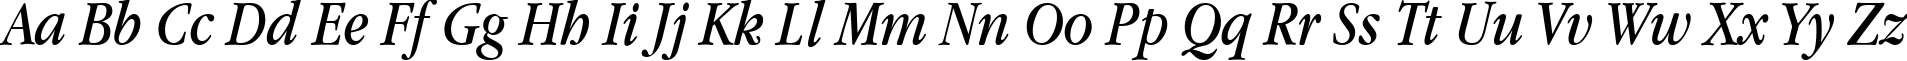 Пример написания английского алфавита шрифтом Apple Garamond Italic